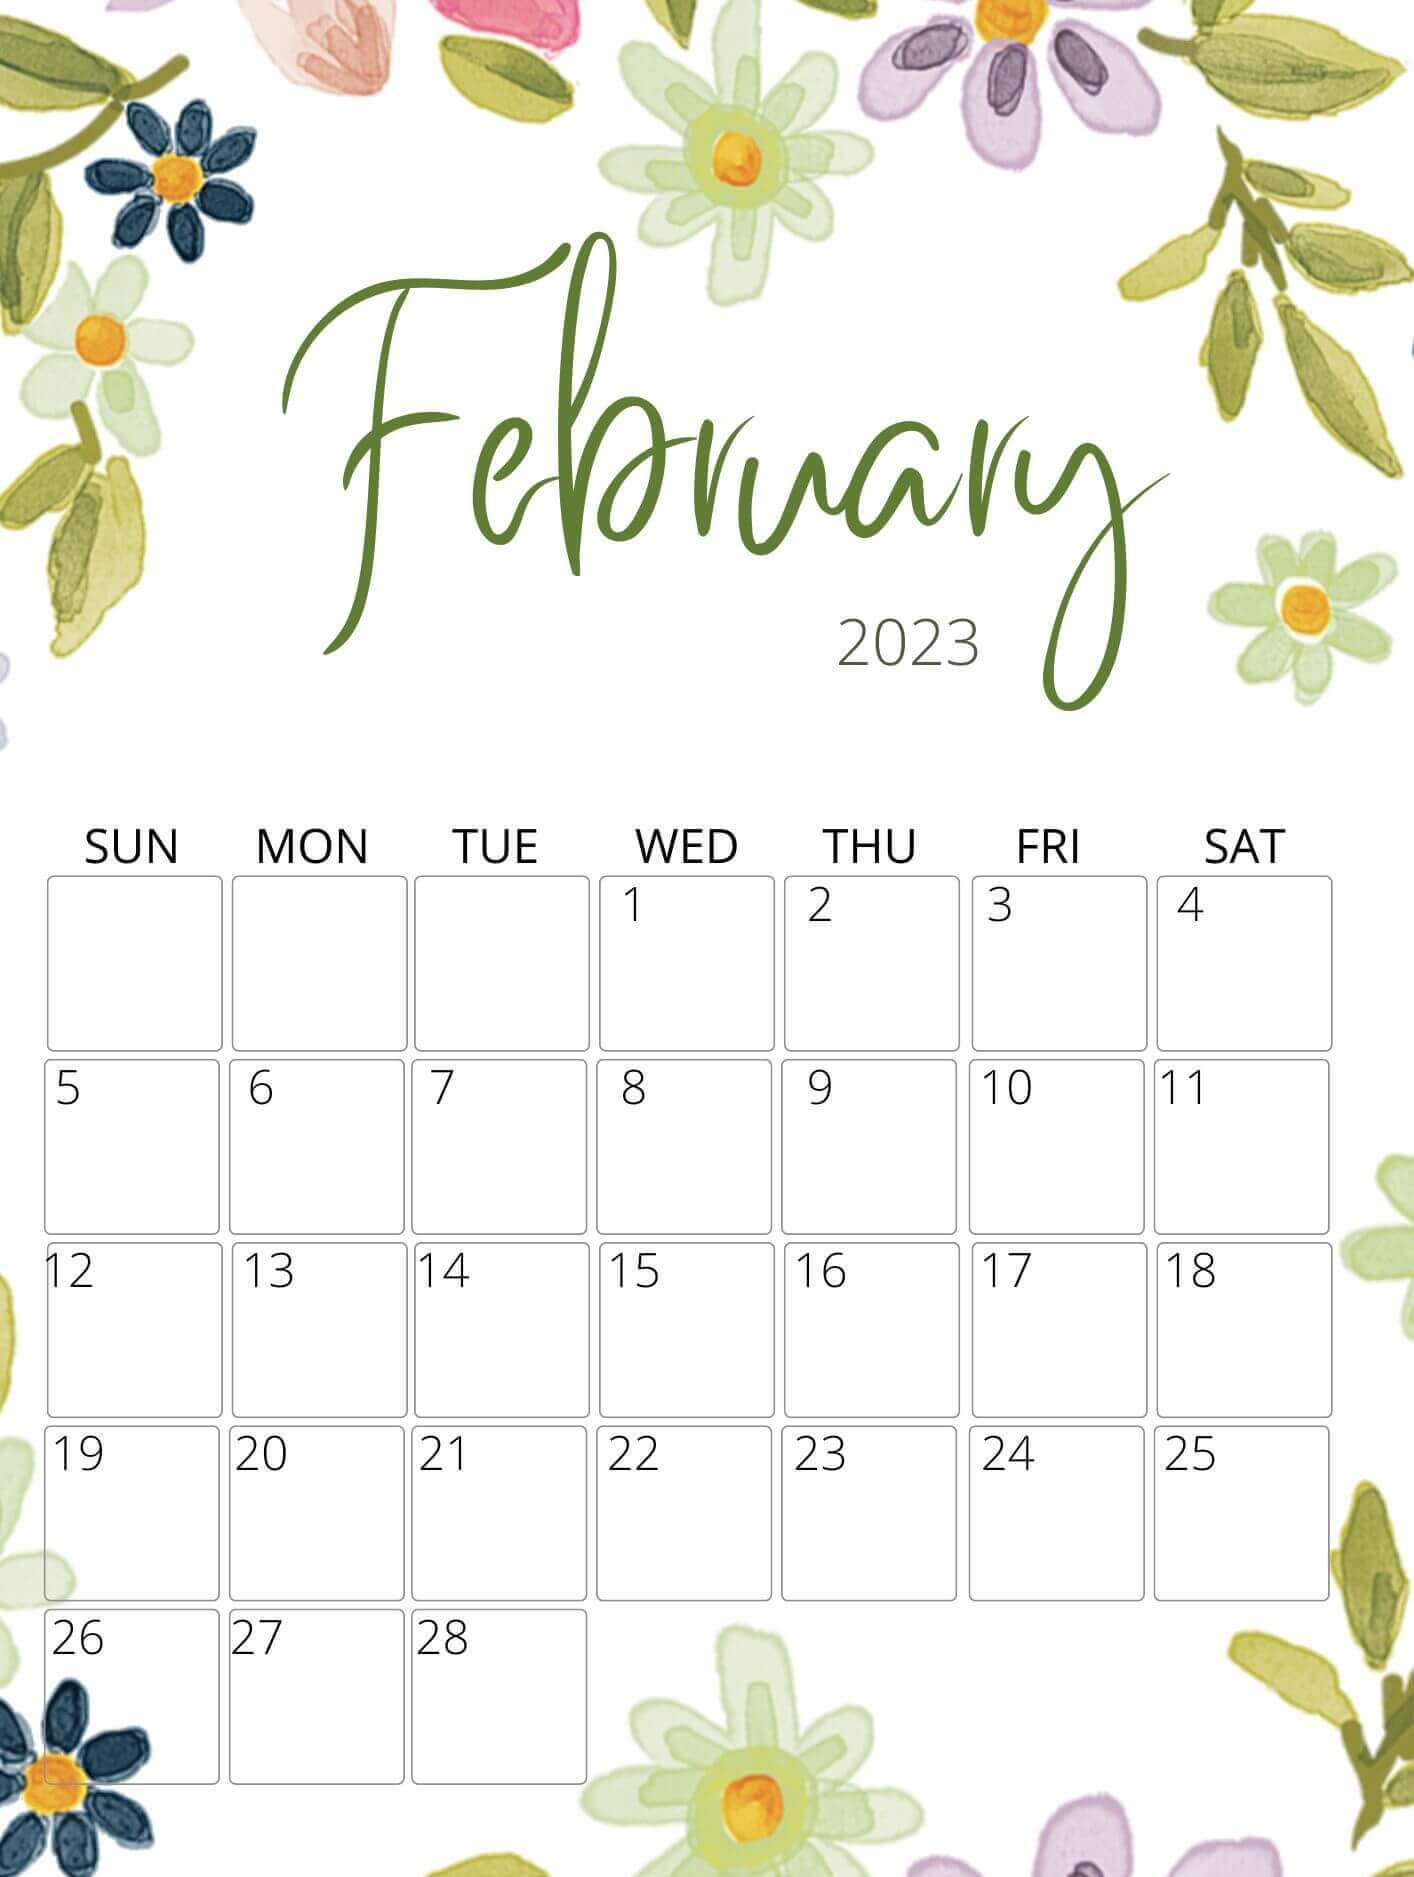 February 2023 Floral Calendar Holidays